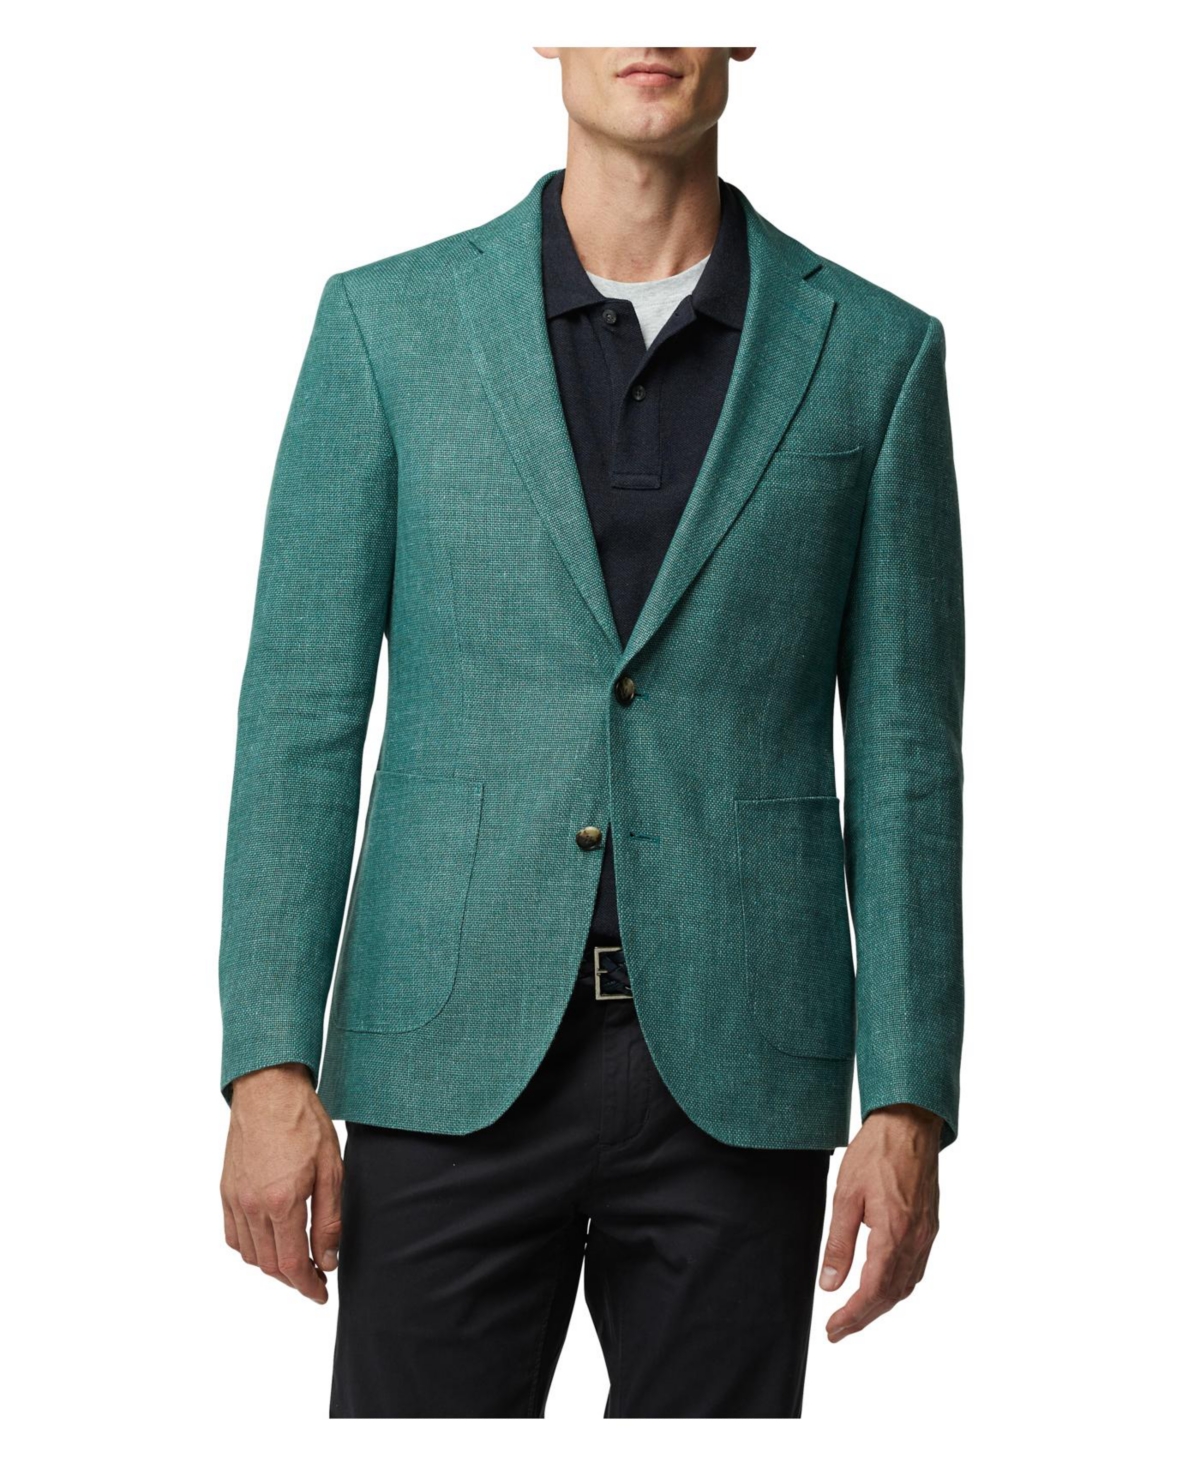 Men's The Cascades Sports Fit Jacket - Pine green